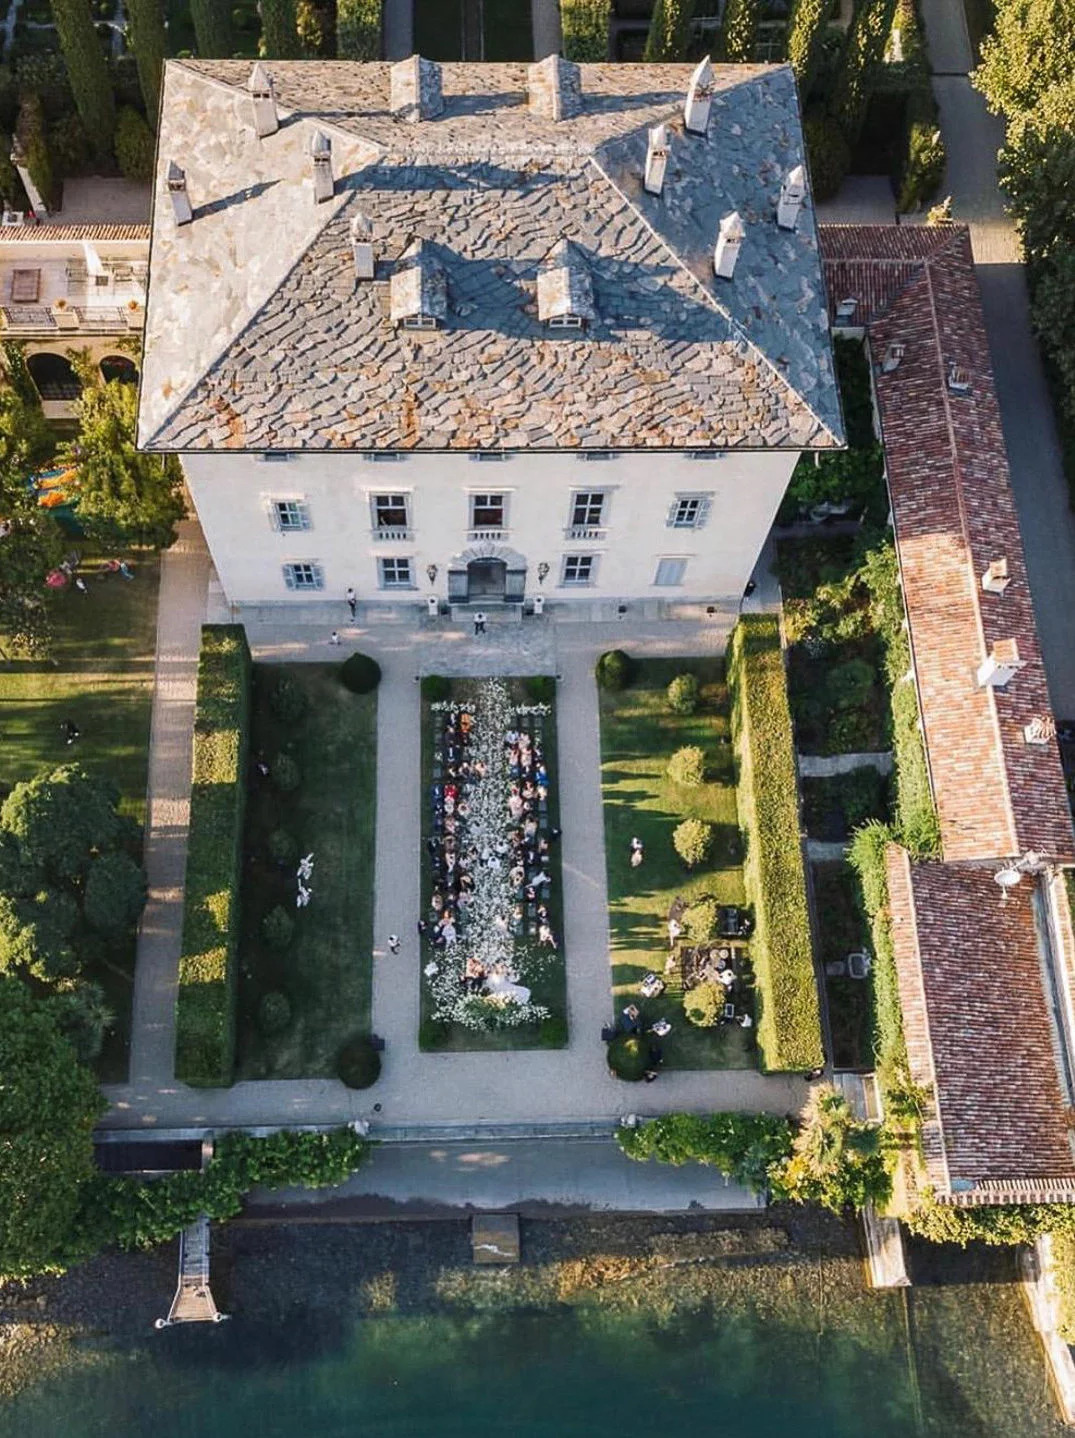 The scenic Villa Balbiano in Lombardy’s Lake Como offers a lush venue with world-class views